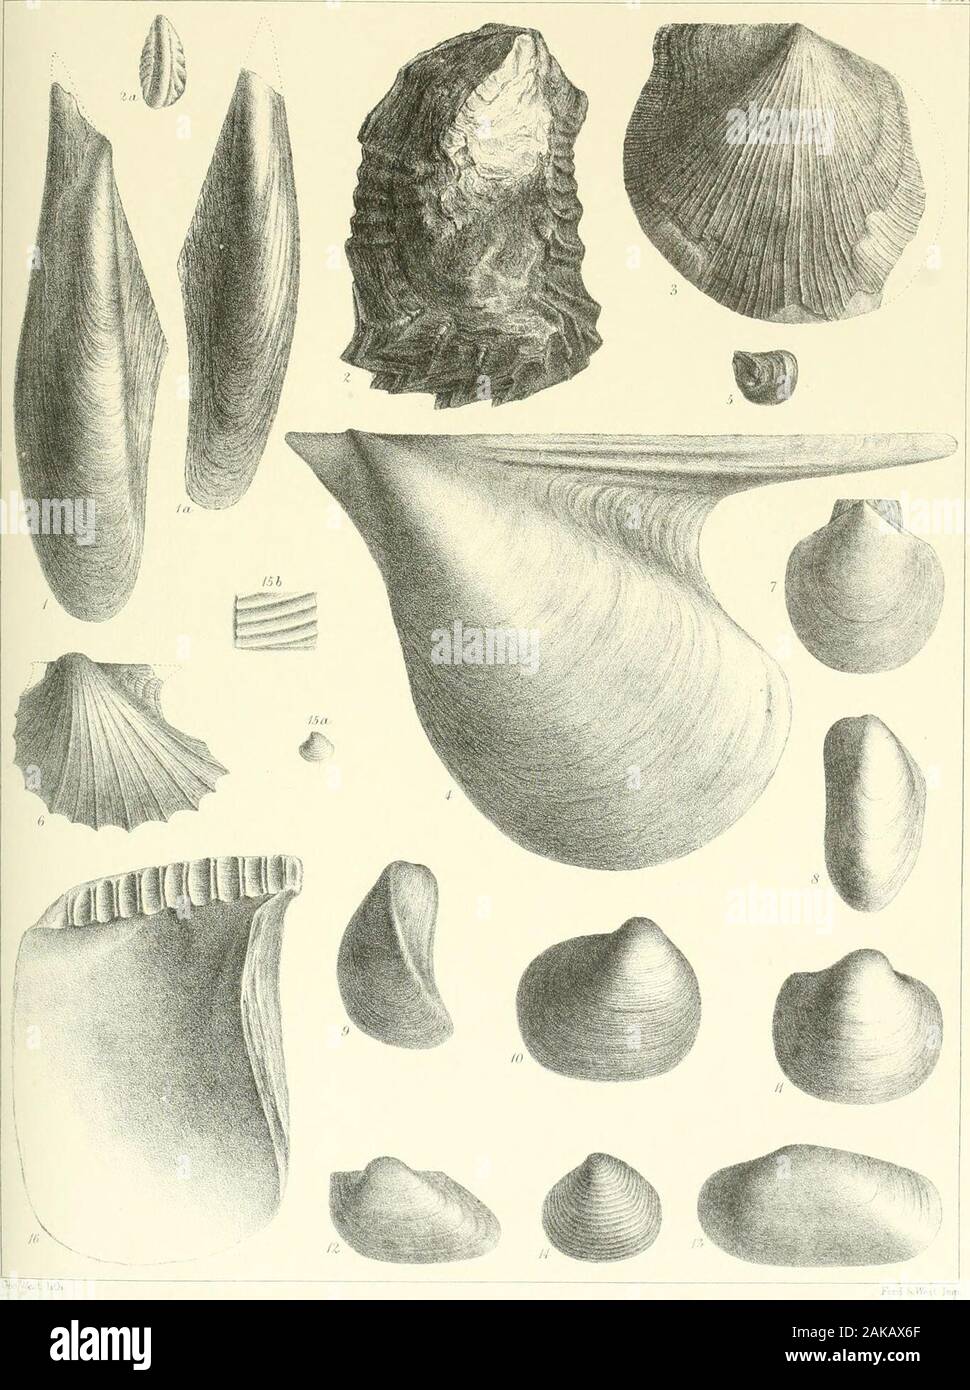 A monograph of the Mollusca from the Great Oolite chiefly from Minchinhampton and the coast of Yorkshire . v UoVfet I jlli Frd*- TAB. XIV. Fig. 1. la. Gervillia acuta, p. 20. 2. Ostrea Marshii, p. 126. 2a. Young of ditto (0. sidcifera), p. 127. 3. Hinnites abjectus, p. 125. 4. Pteroperna plana, p. 128. 5. Gryphaea miuia, p. 127. 6. Avicula Munsteri, ? p. 129. 7. Pectcn demissus, p. 127. 8. Mytilus (Modiola) cuneata, p. 131. 9. Mytilus (Modiola) Leckenbyi, p. 181. 10. Unicardium depressum, p. 133. 11. Unicardium gibbosuin, p. 132. 12. Cucullaea cancellata, p. 132. 13. Quenstedtia laevigata, p. Stock Photo